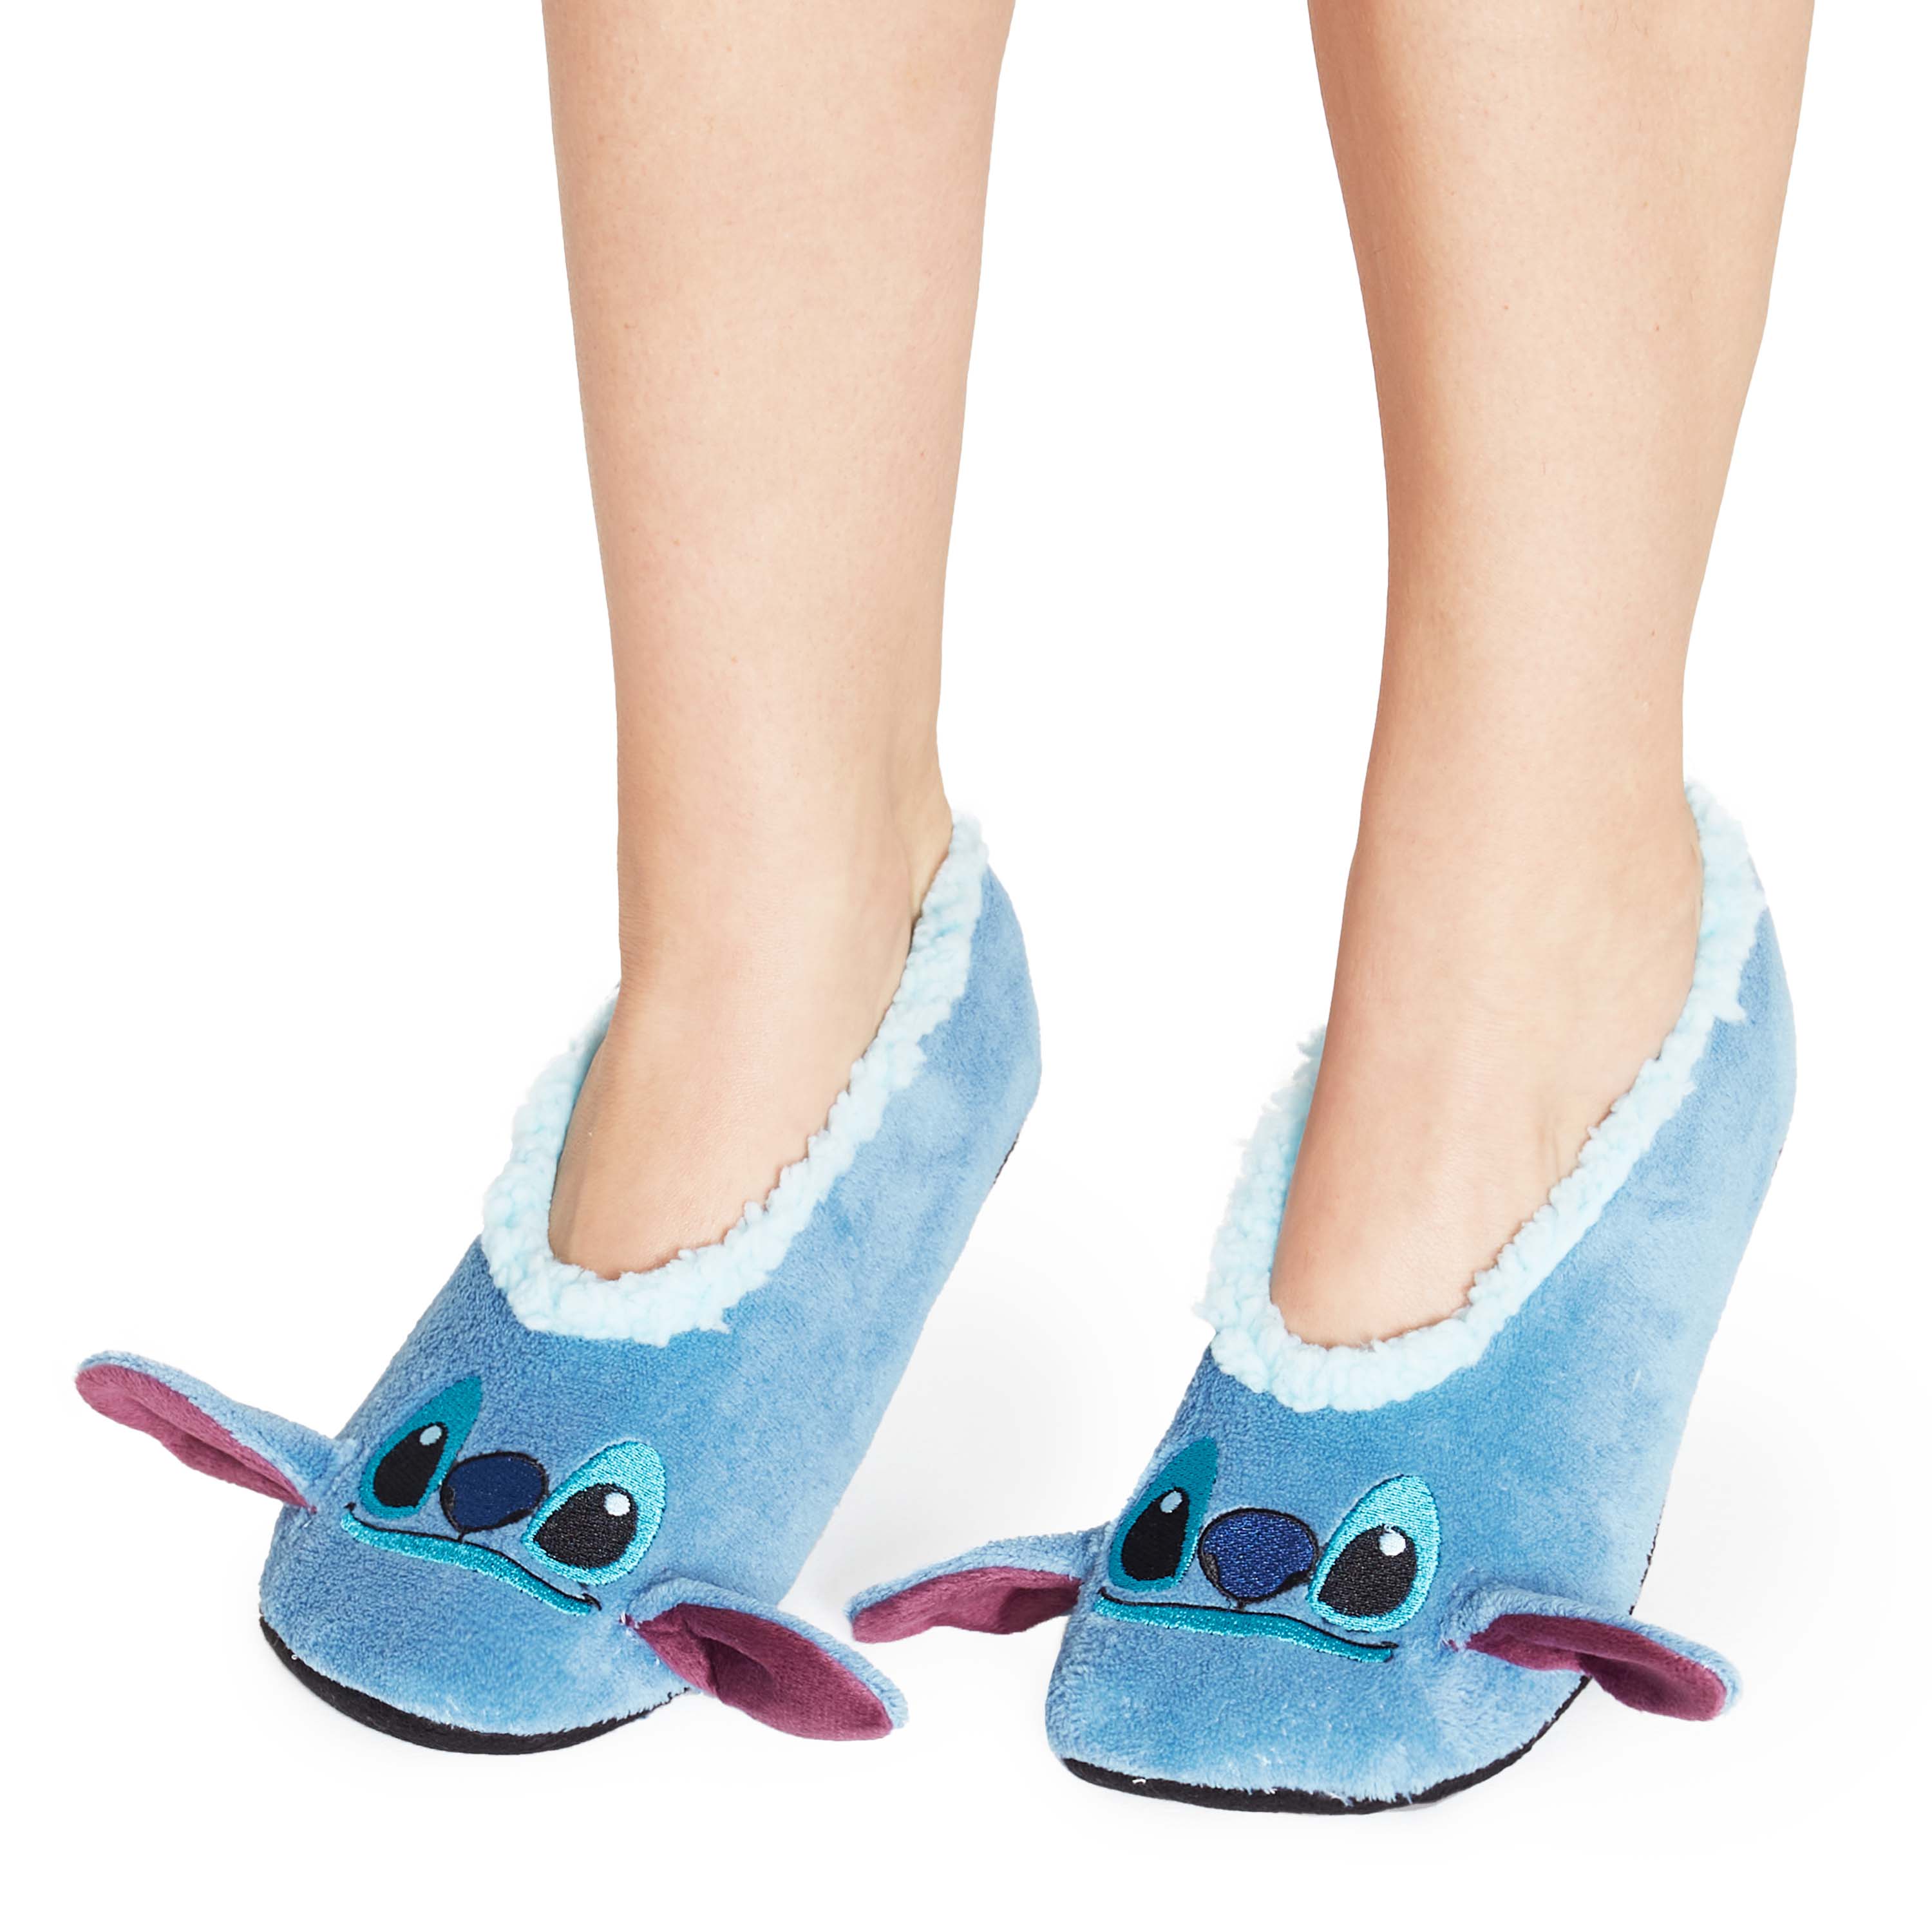 Lilo & Stitch Slippers For Women Girls Teens Disney Slip On Ballet